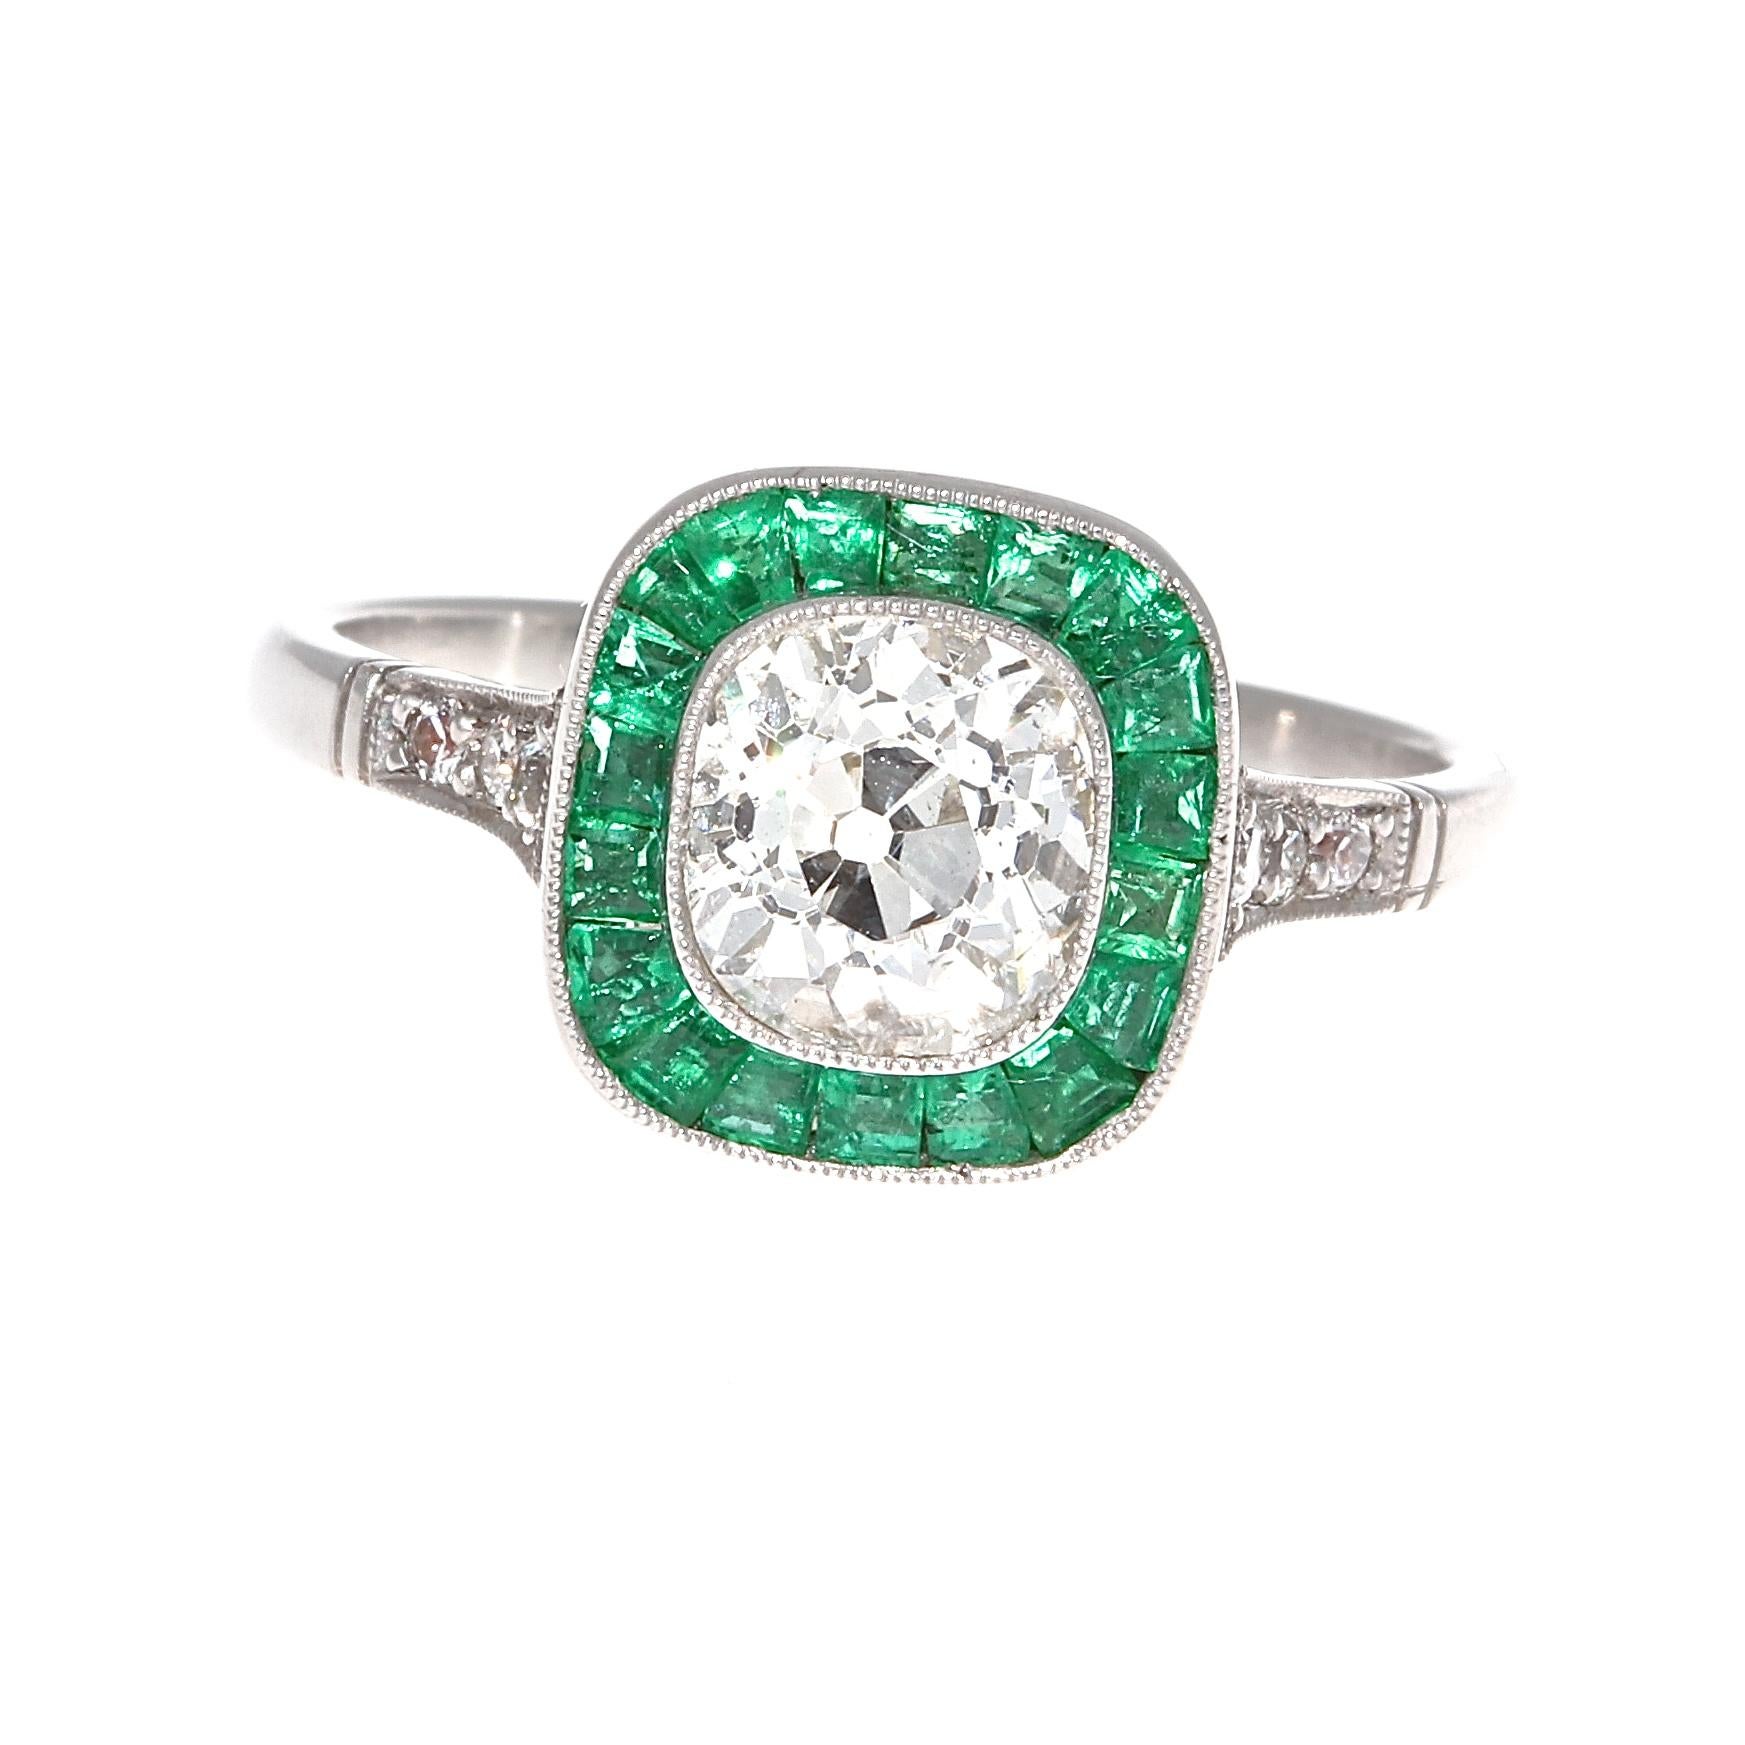 Old Mine Cut Art Deco Style Diamond Emerald Platinum Engagement Ring